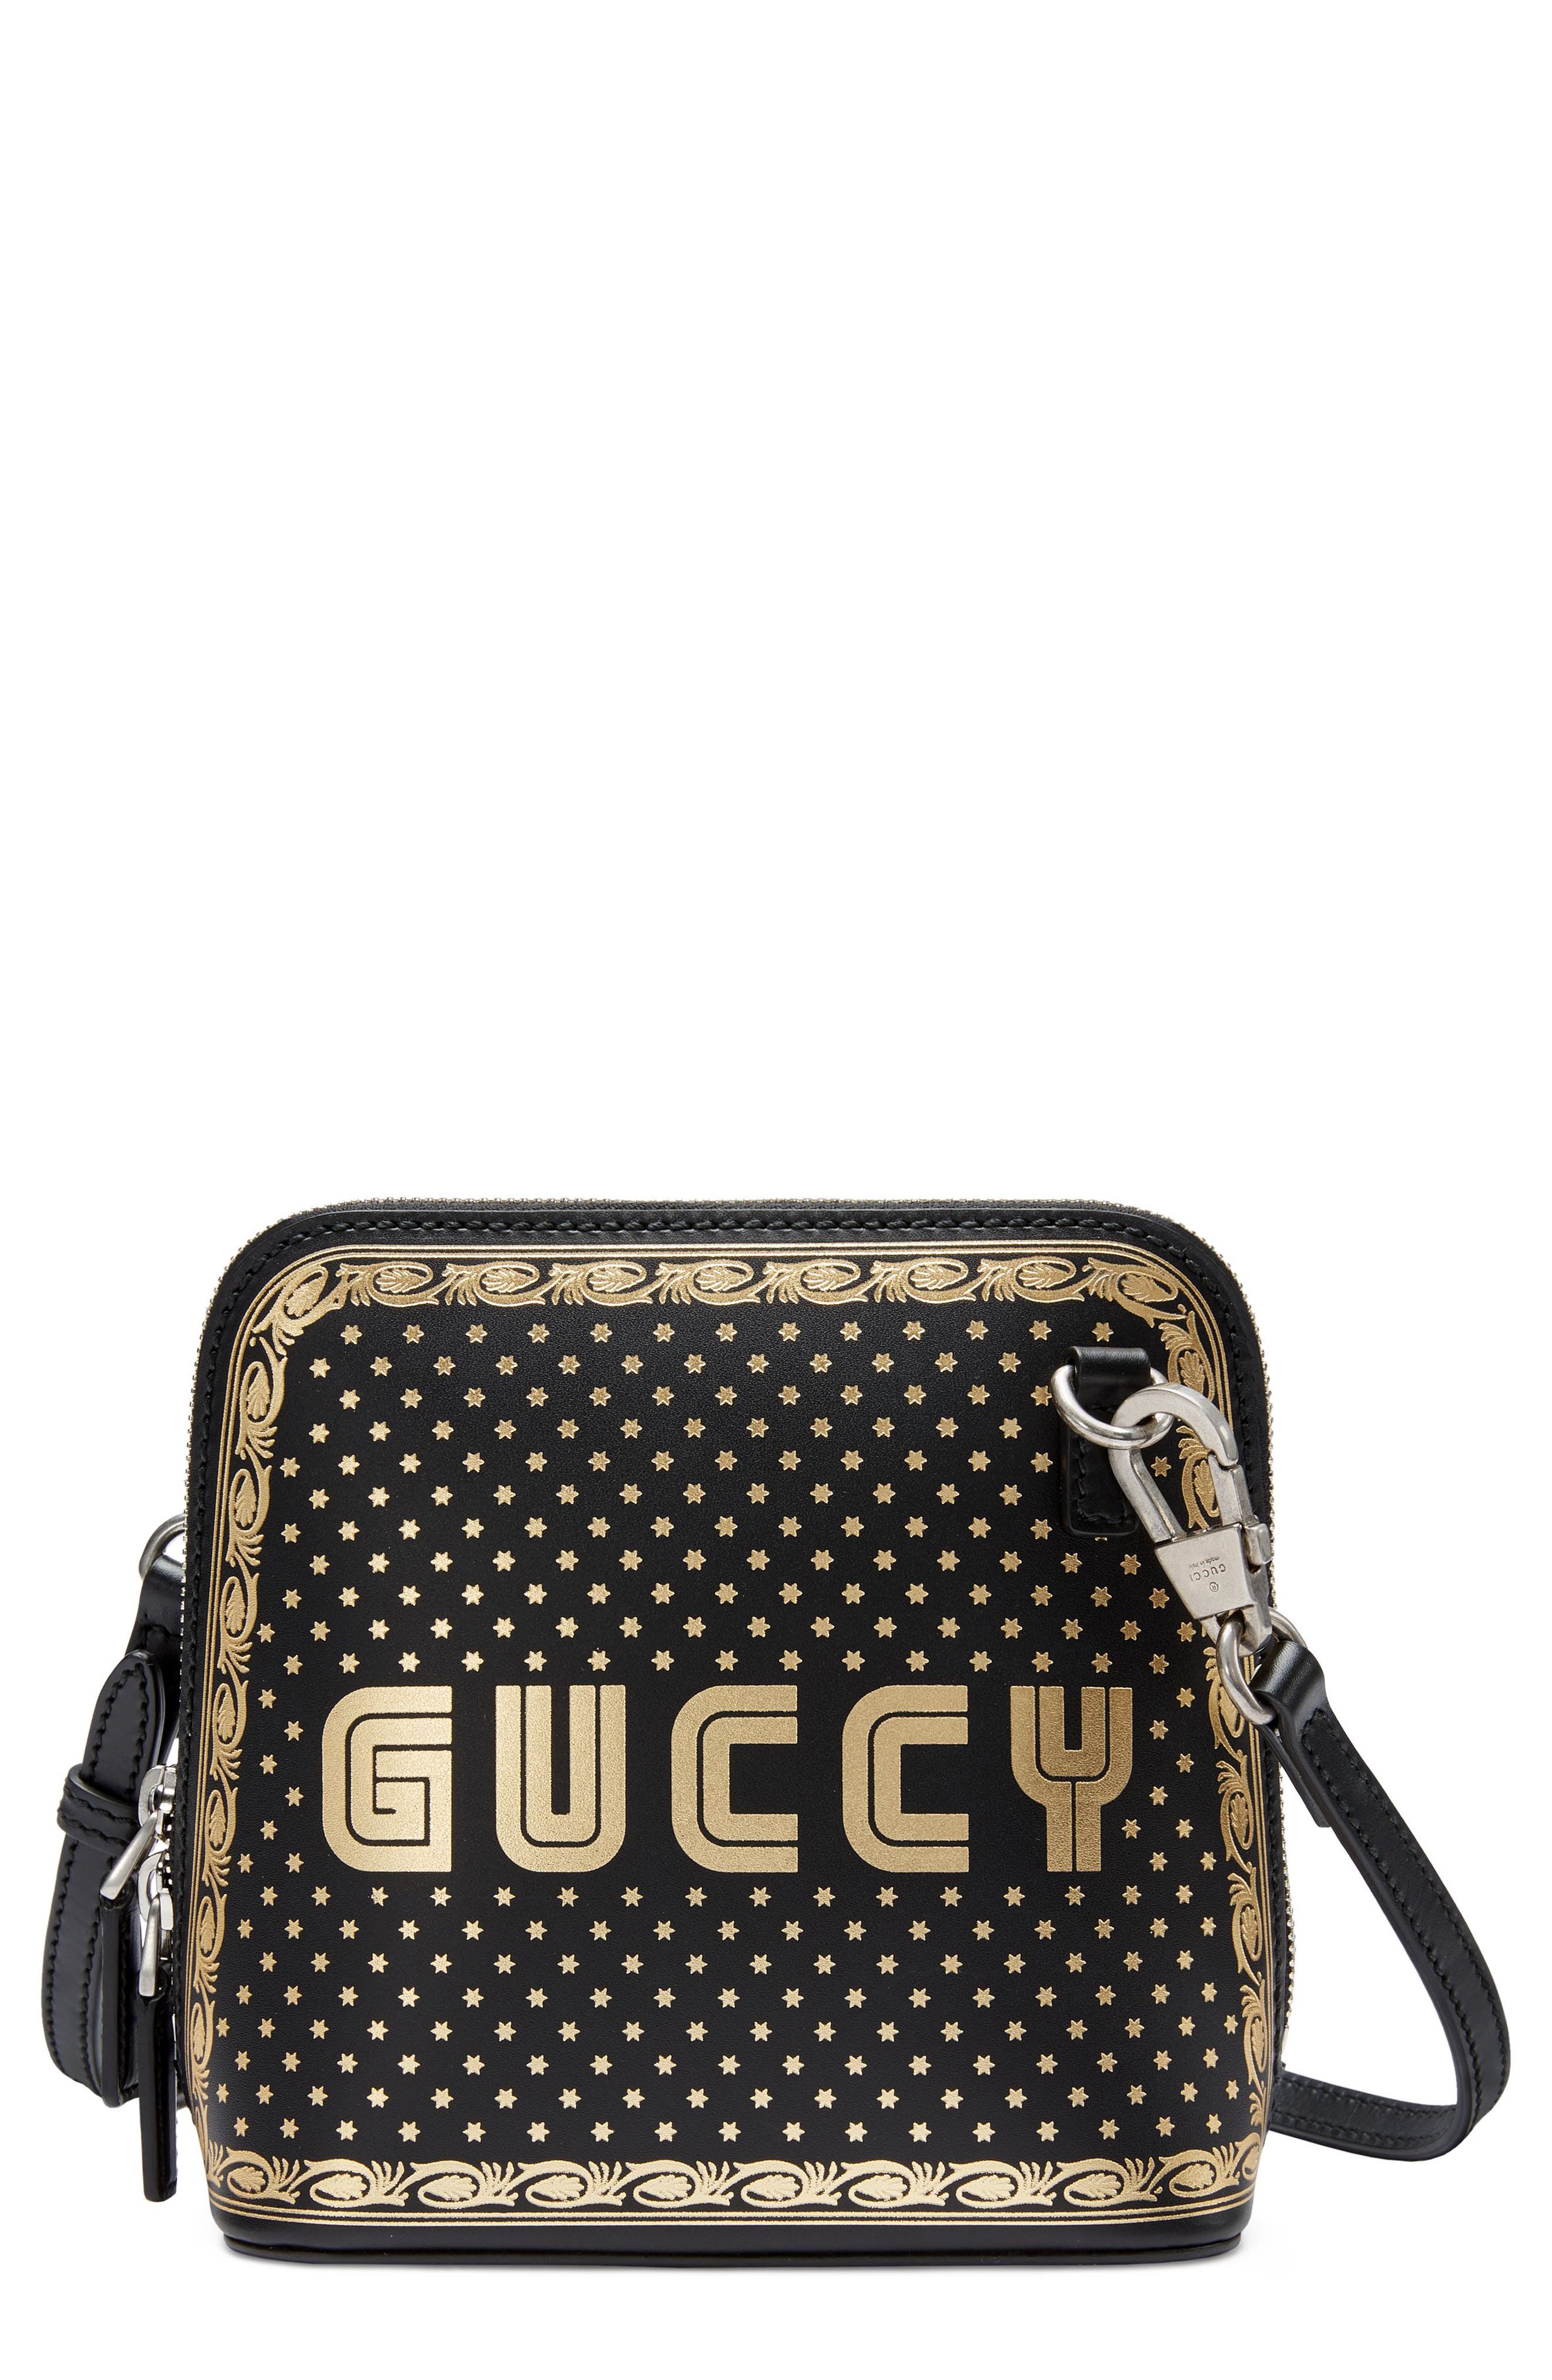 Gucci Guccy Logo Moon \u0026 Stars Leather 